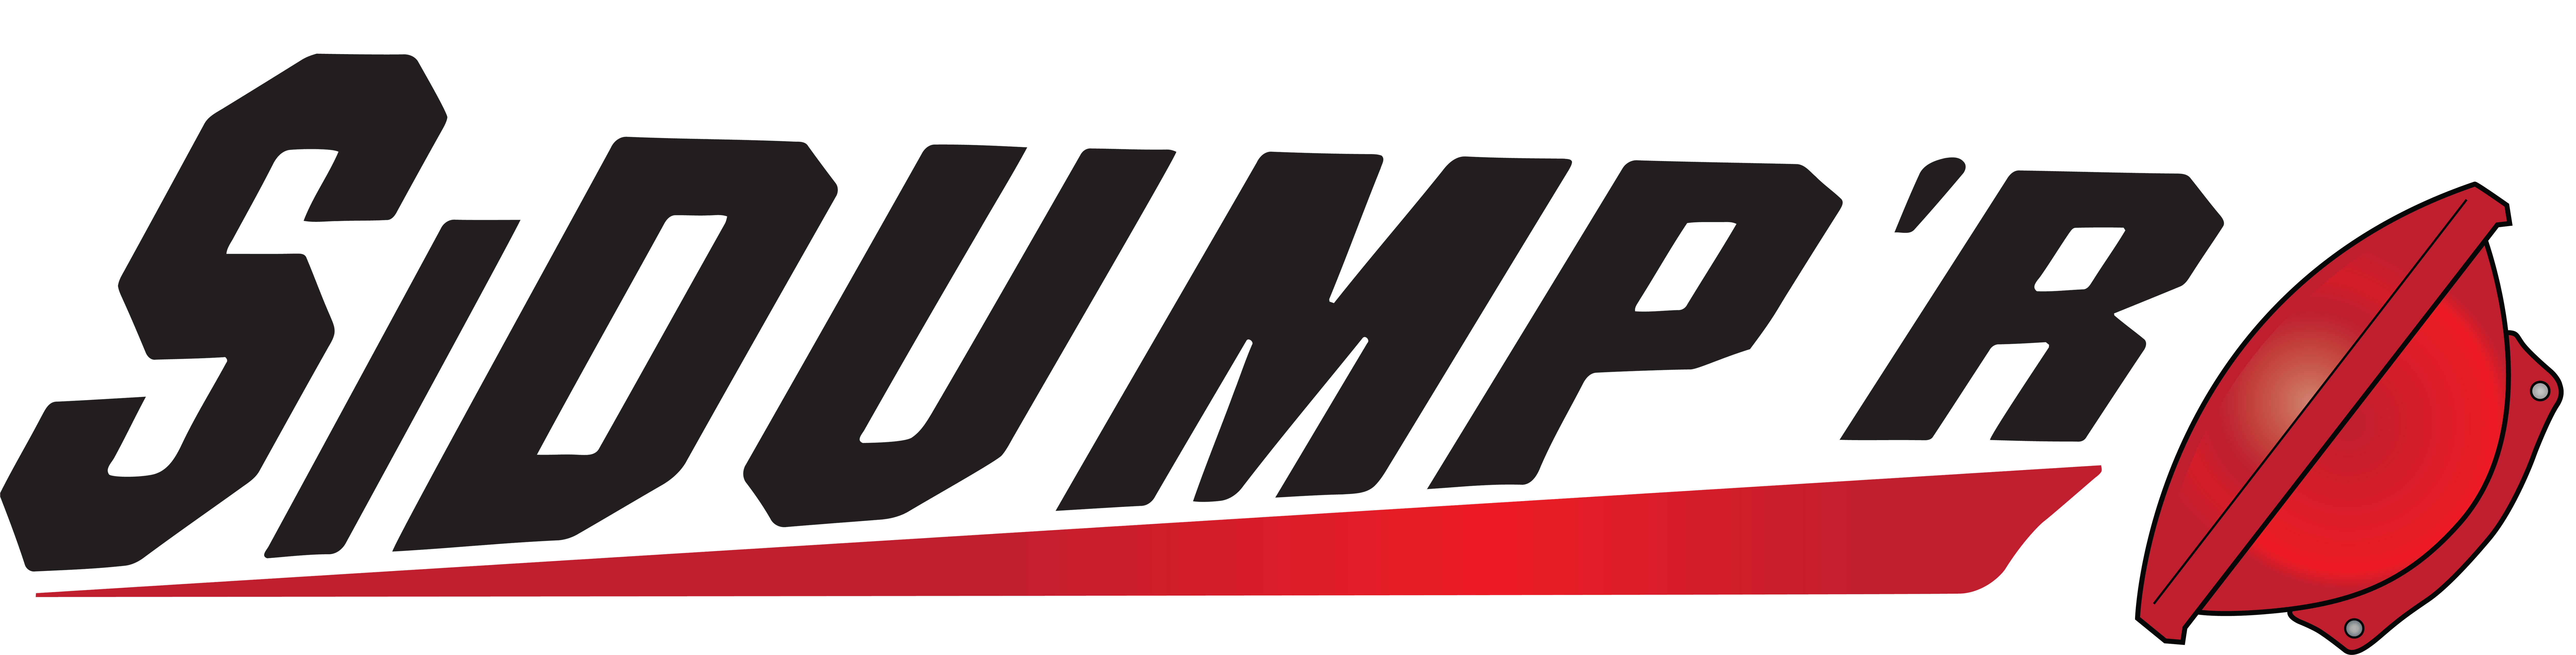 Sidumpr Logo Red